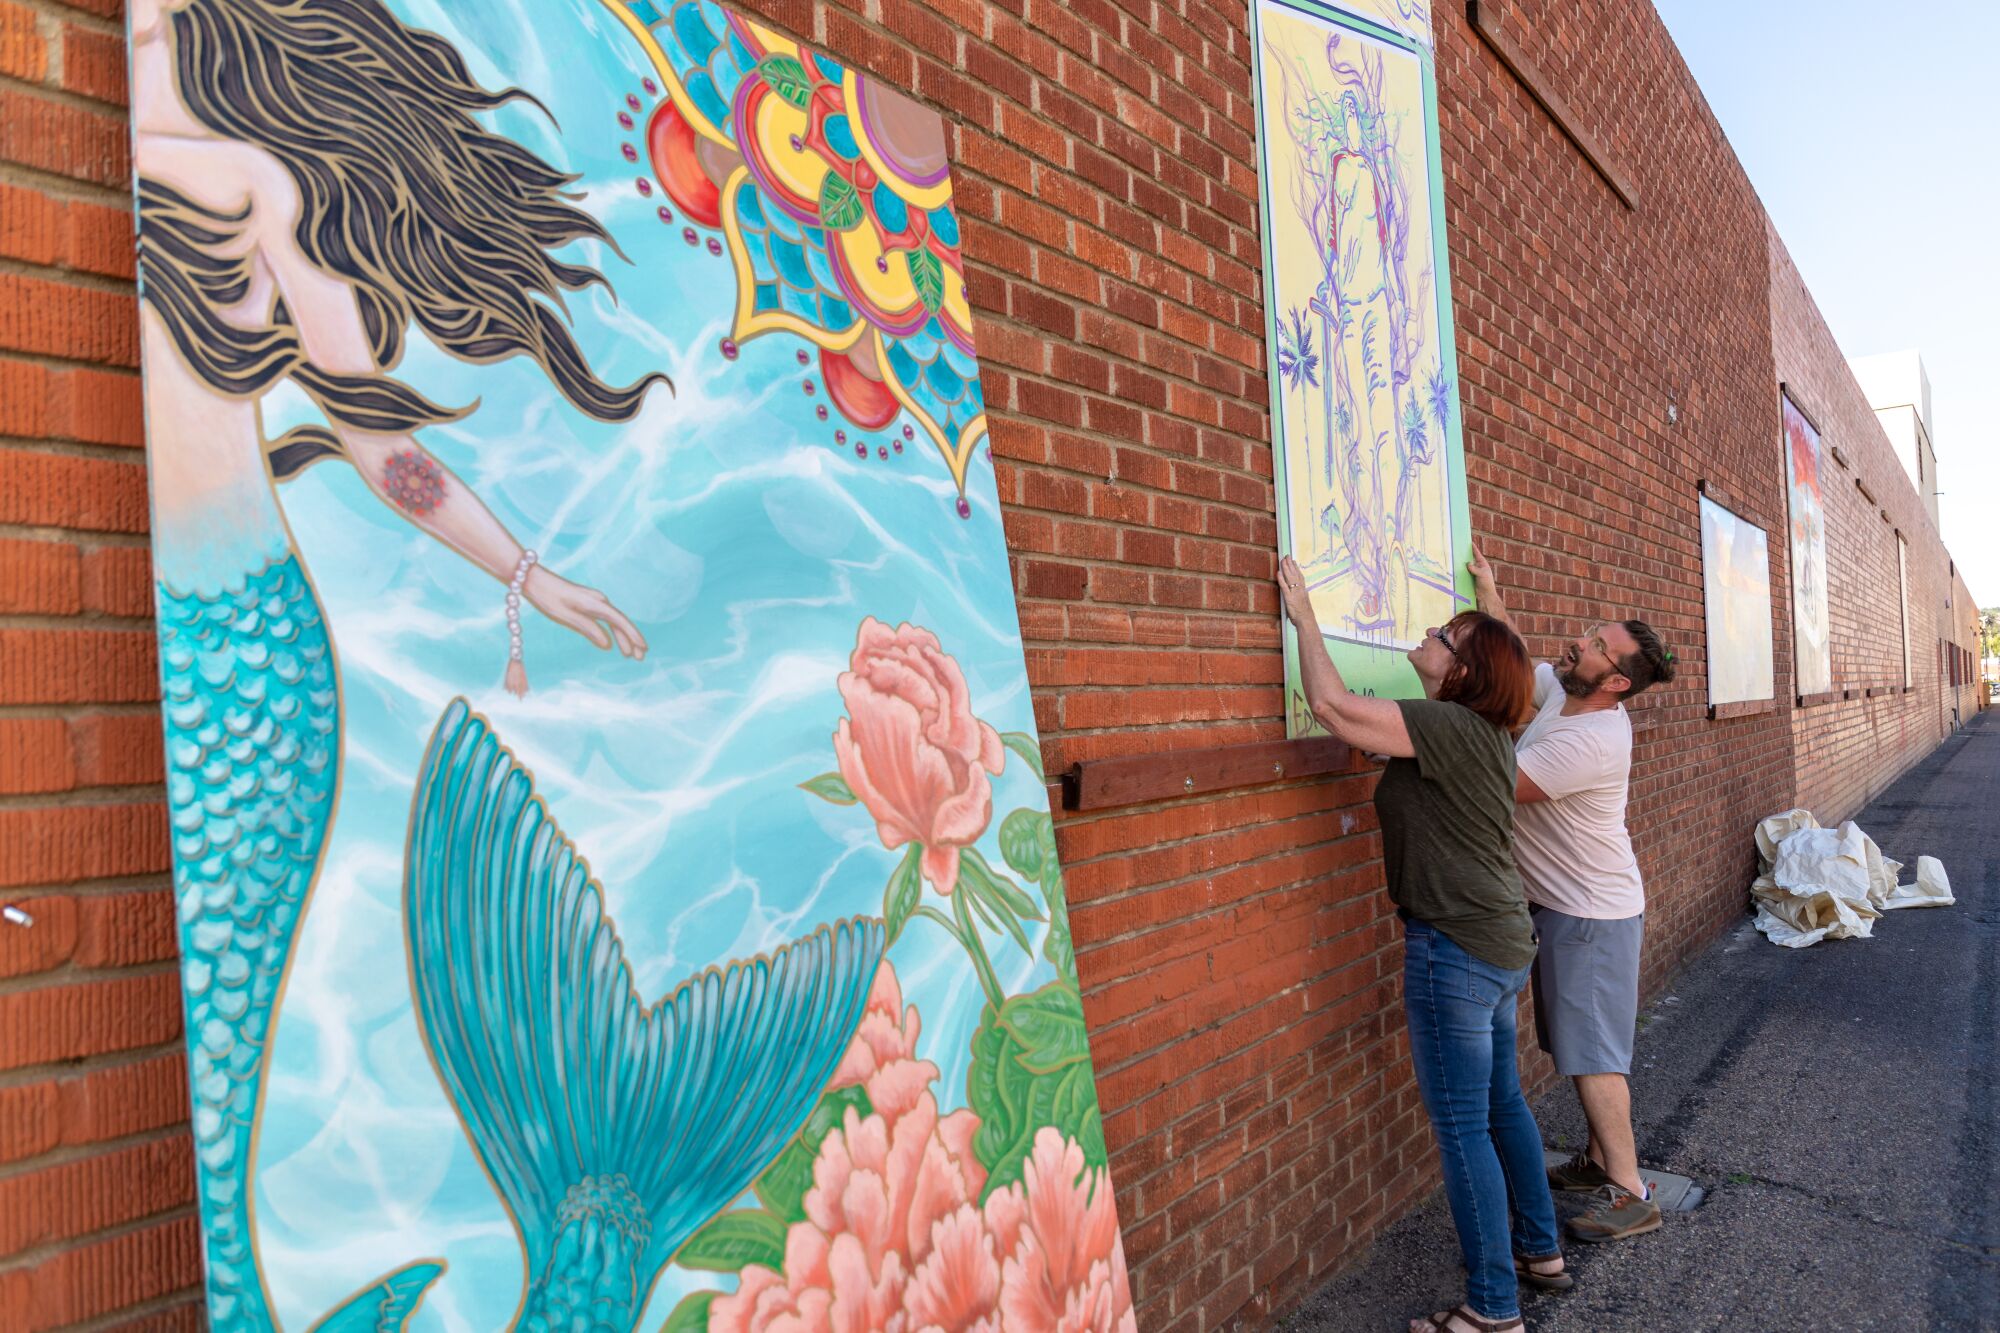 Escondido Art Association committee members Heather Moe and Tristan Pittard install artist mural panels